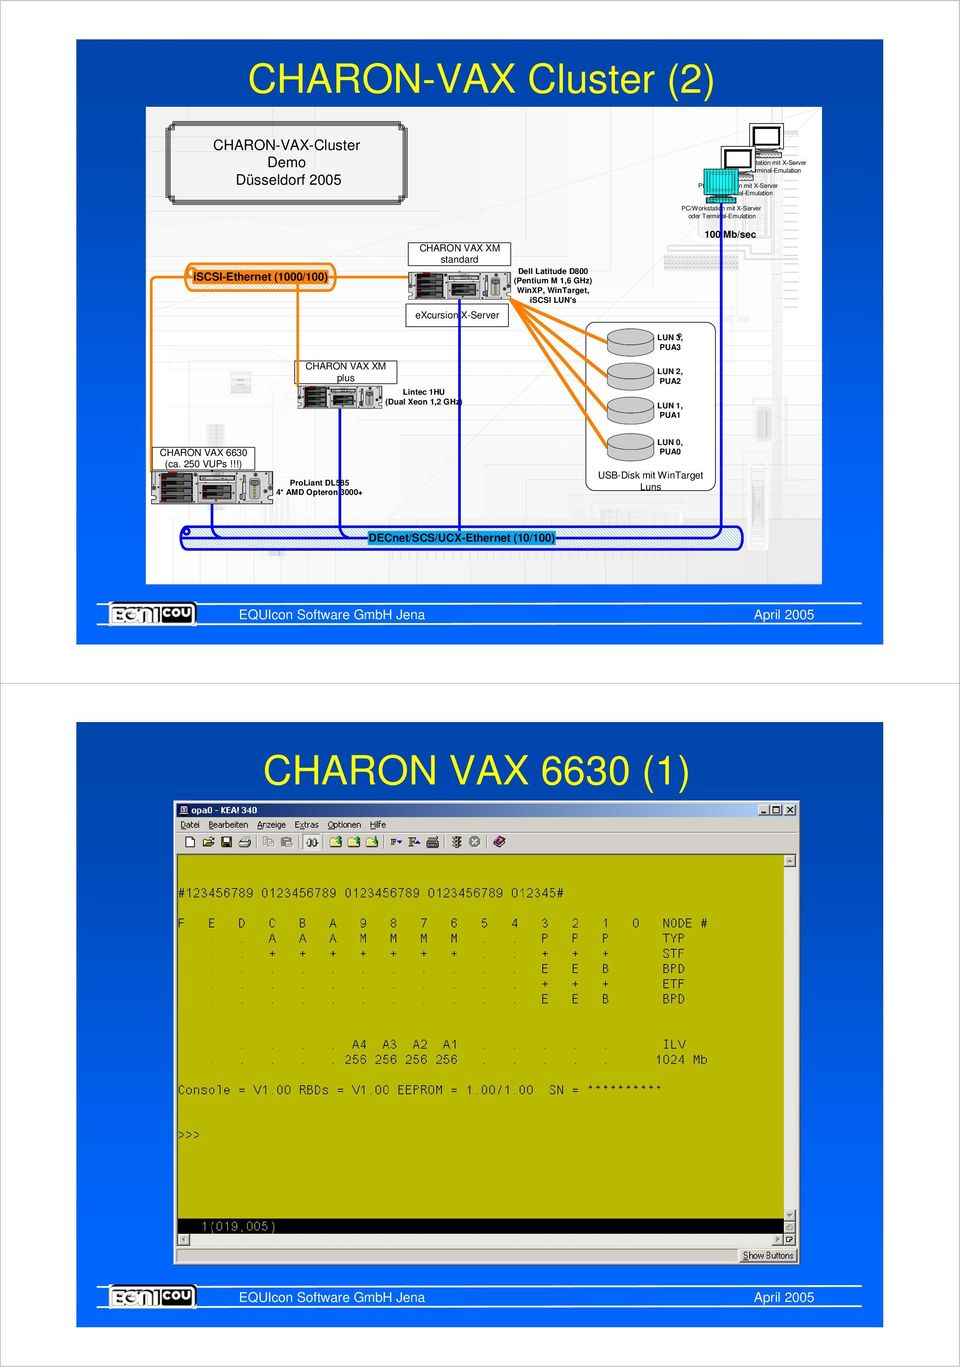 excursion X-Server LUN 3, PUA3 CHARON VAX XM plus Lintec 1HU (Dual Xeon 1,2 GHz) LUN 2, PUA2 LUN 1, PUA1 CHARON VAX 6630 (ca.